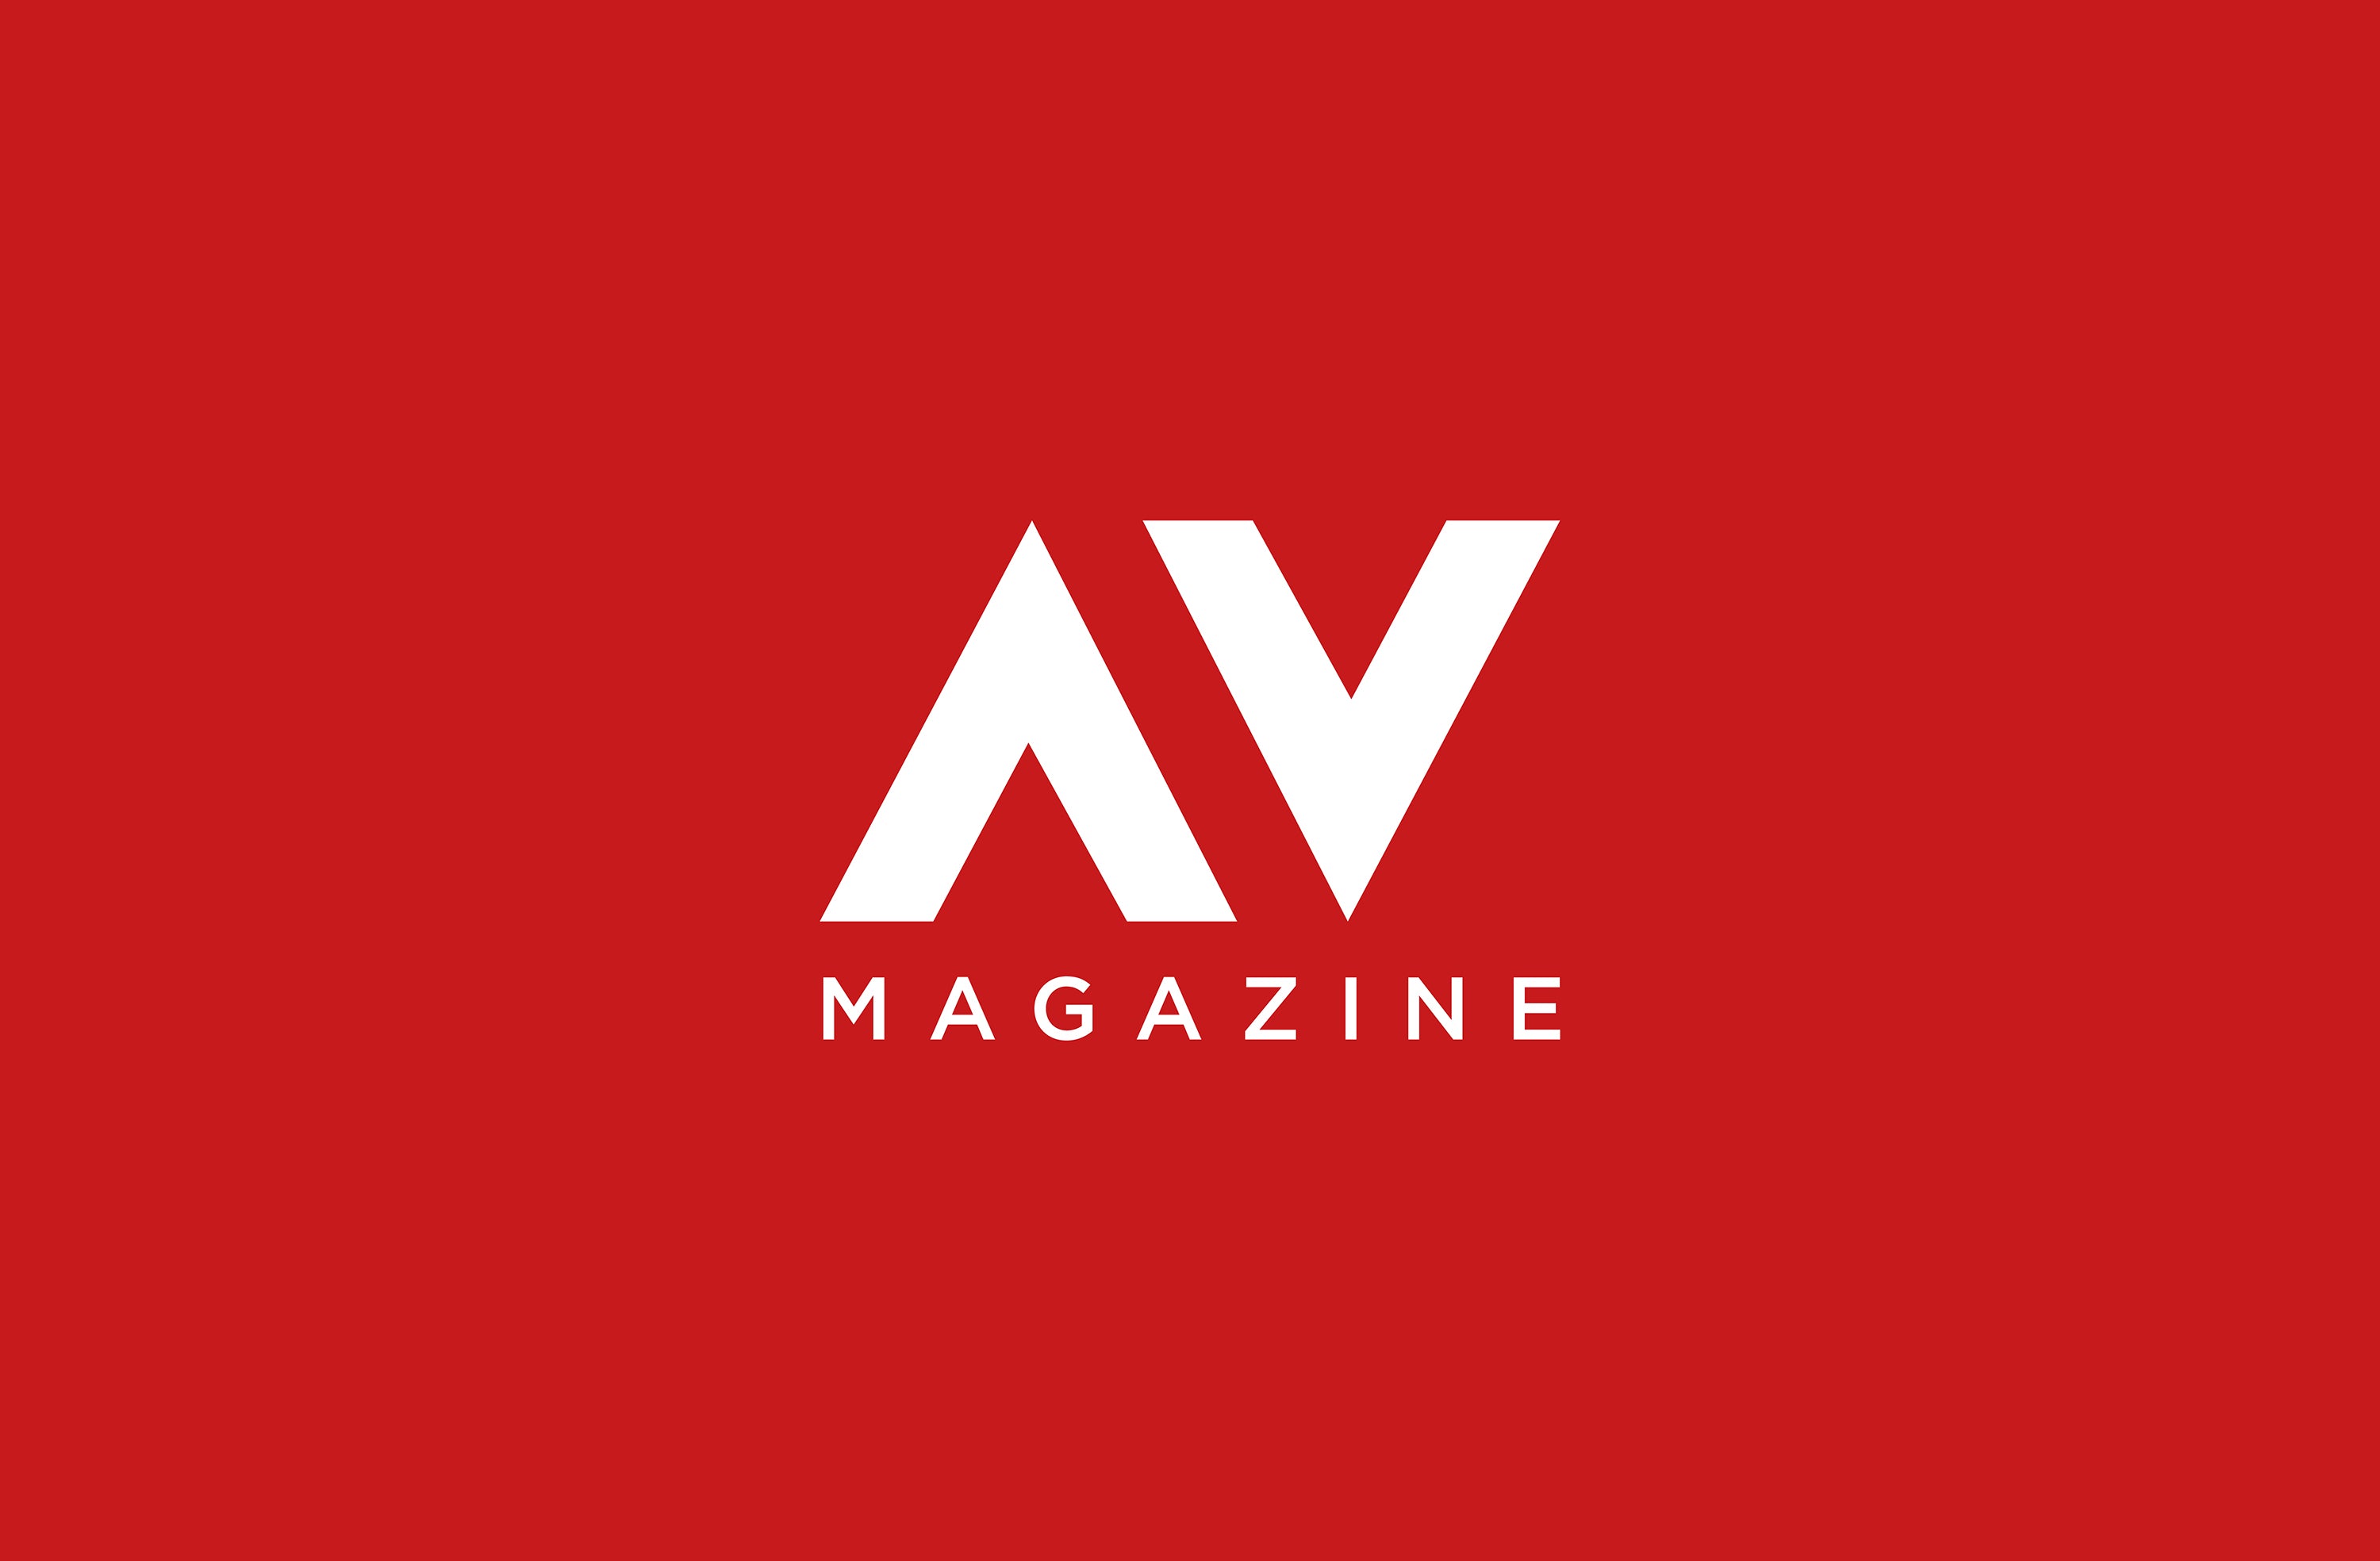 AV Magazine Article: Sarah Whittaker, Grand Technix: ‘Anna Valley did a good job’